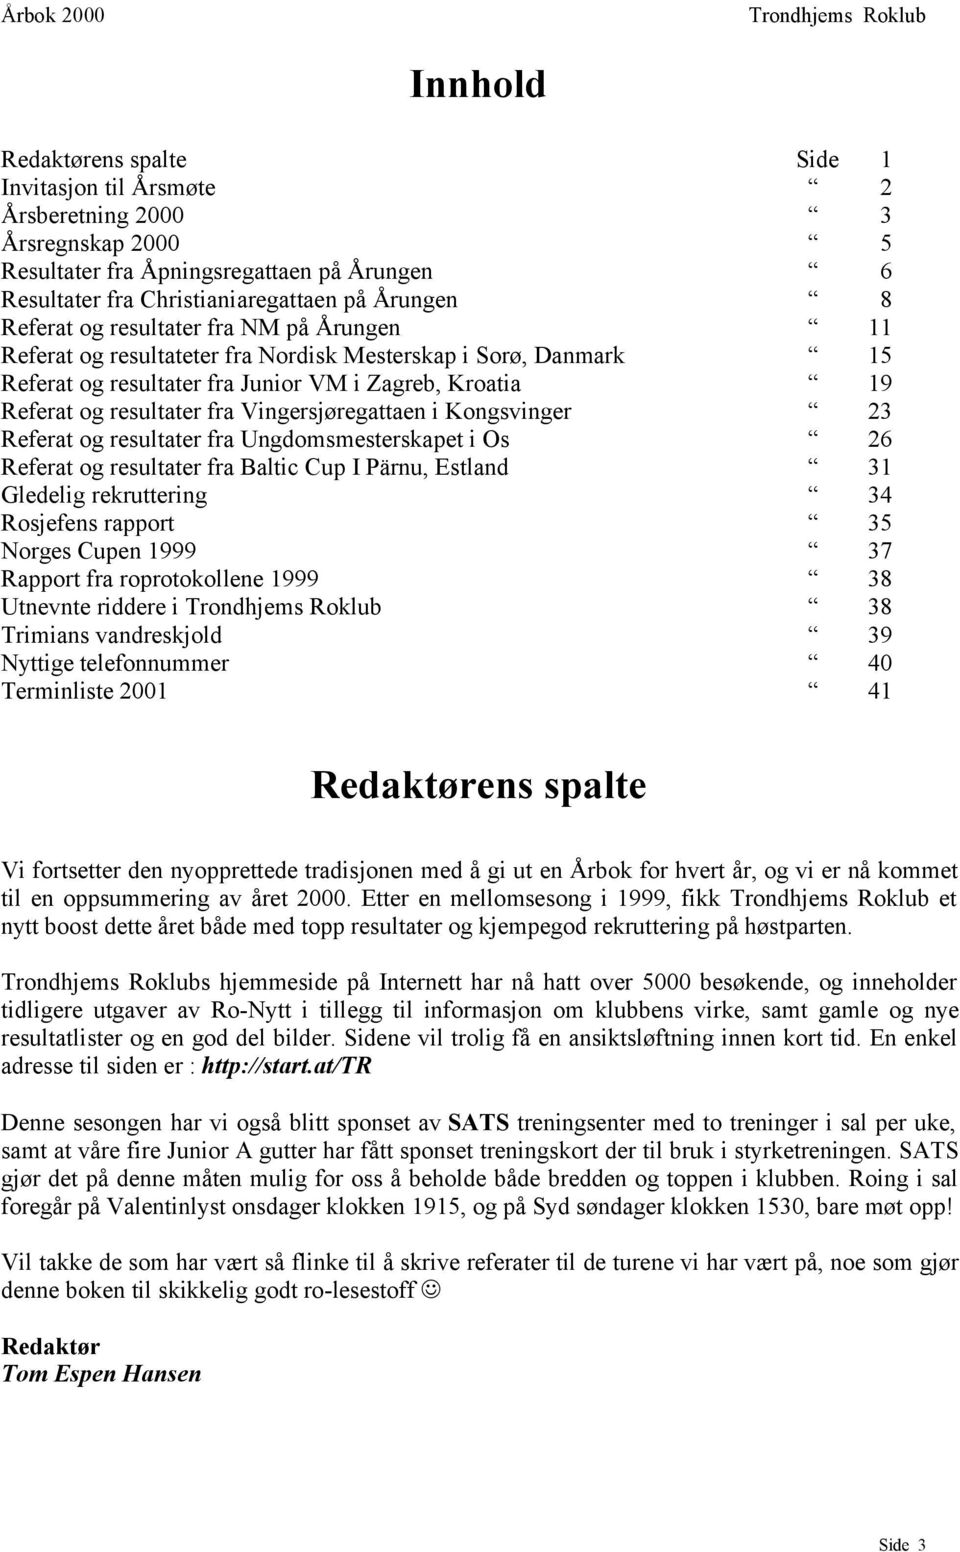 Referat og resultater fra Ungdomsmesterskapet i Os Referat og resultater fra Baltic Cup I Pärnu, Estland Gledelig rekruttering Rosjefens rapport Norges Cupen 1999 Rapport fra roprotokollene 1999